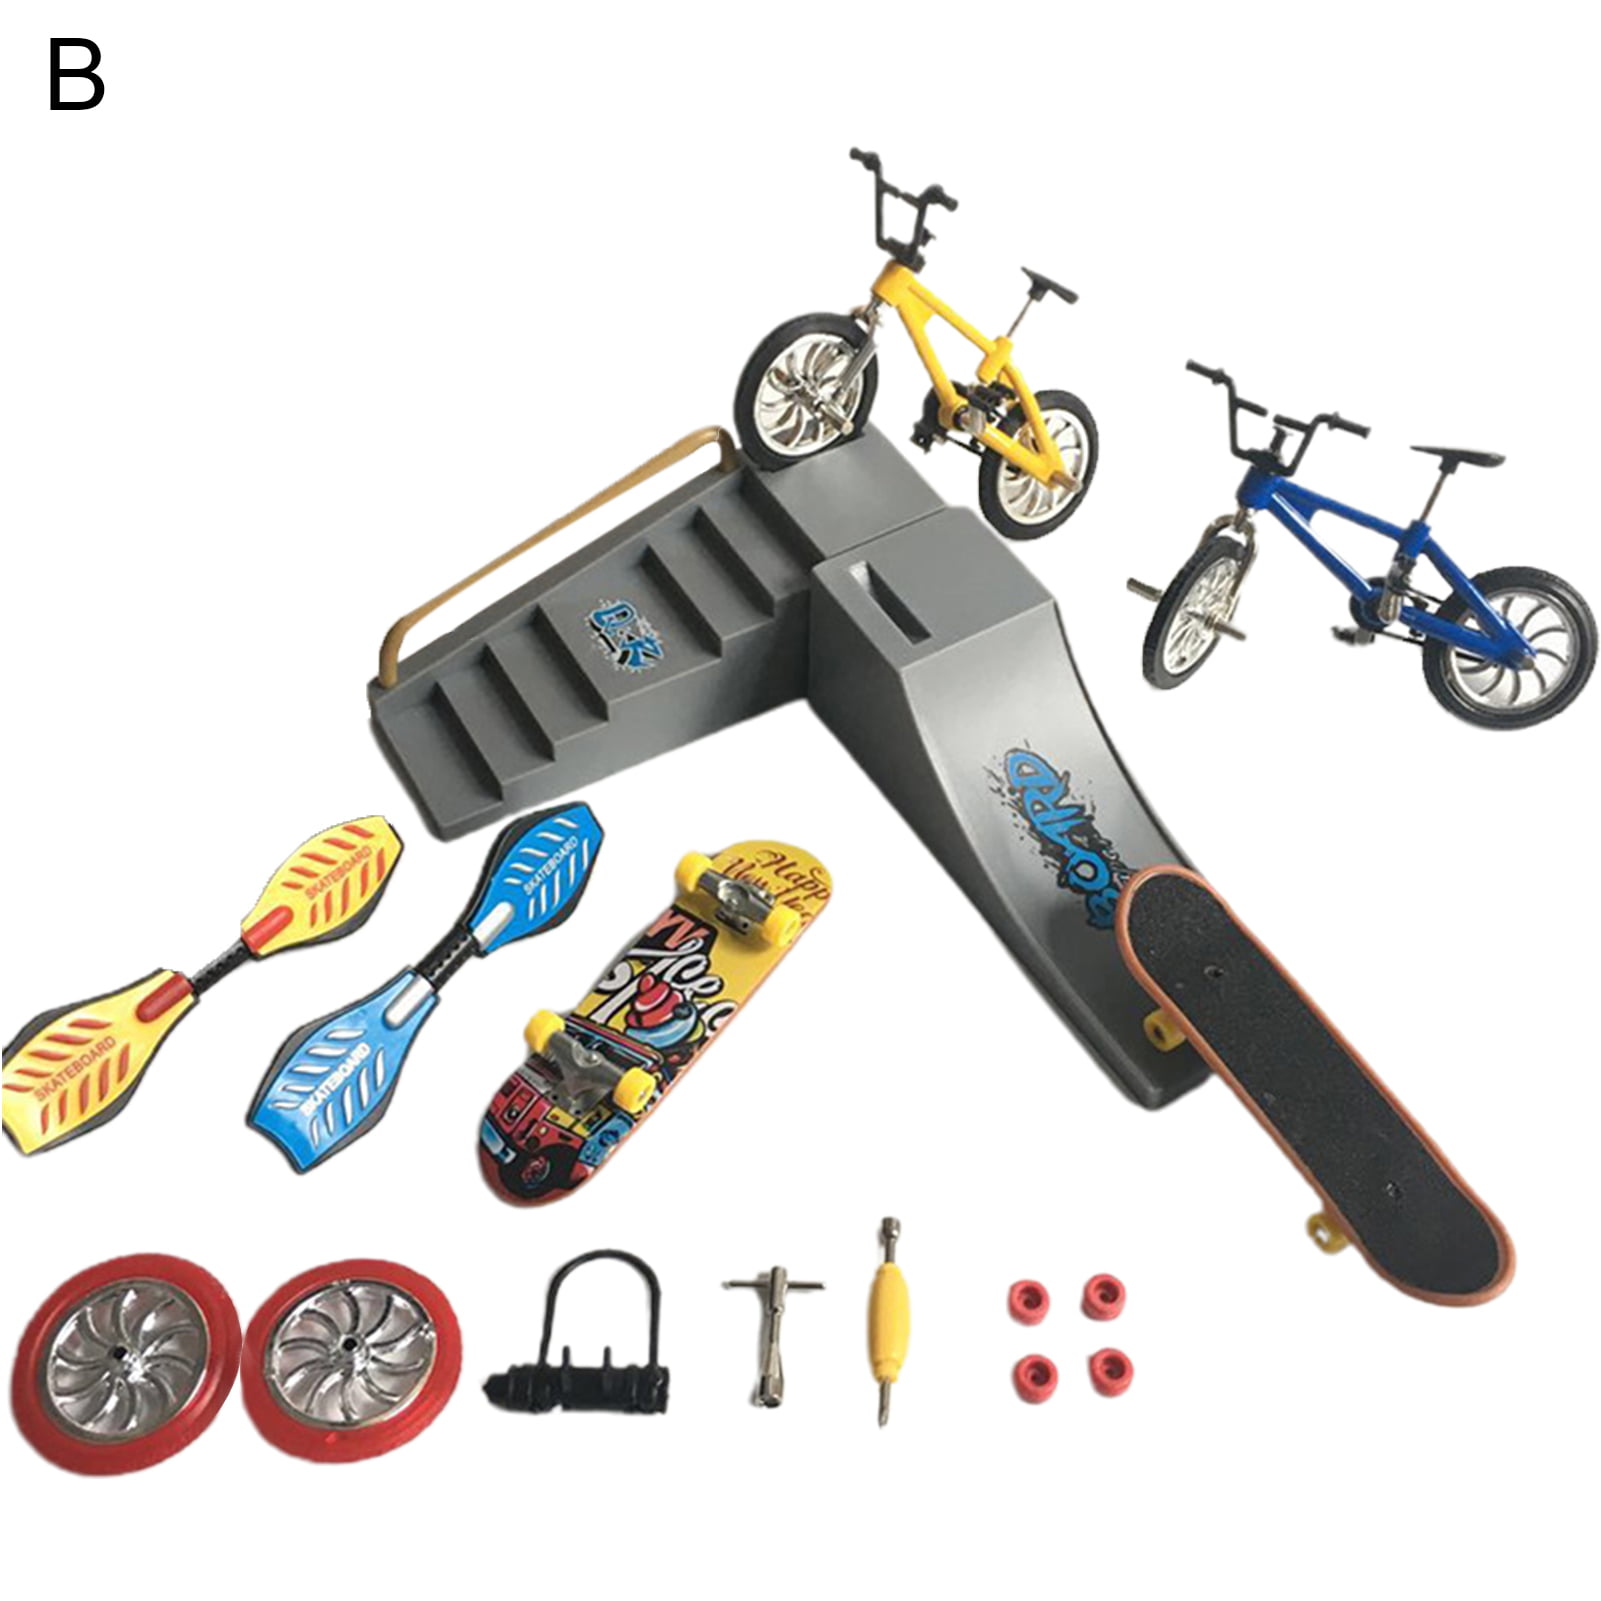 Details about   Mini Scooter Child Educational Toy Finger Scooter Bike Fingerboard SkateboardSL 